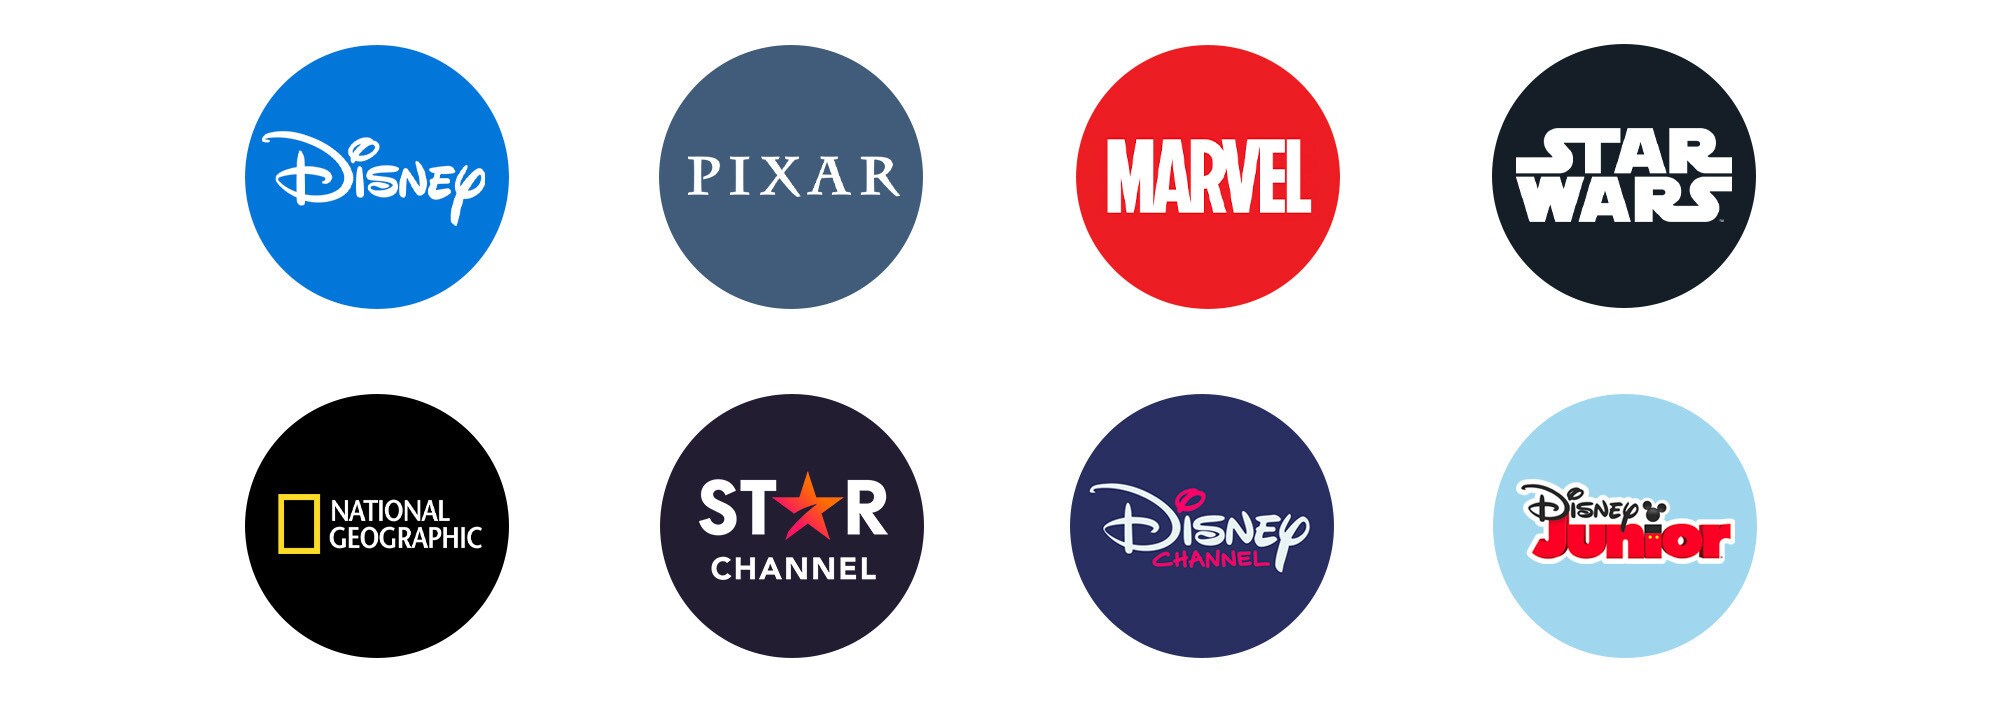 Disney Brands, Disney, Pixar, Marvel, Star Wars, EPSN, National Geographic, Star Channel, 24Kitchen, Disney Channel and Disney XD